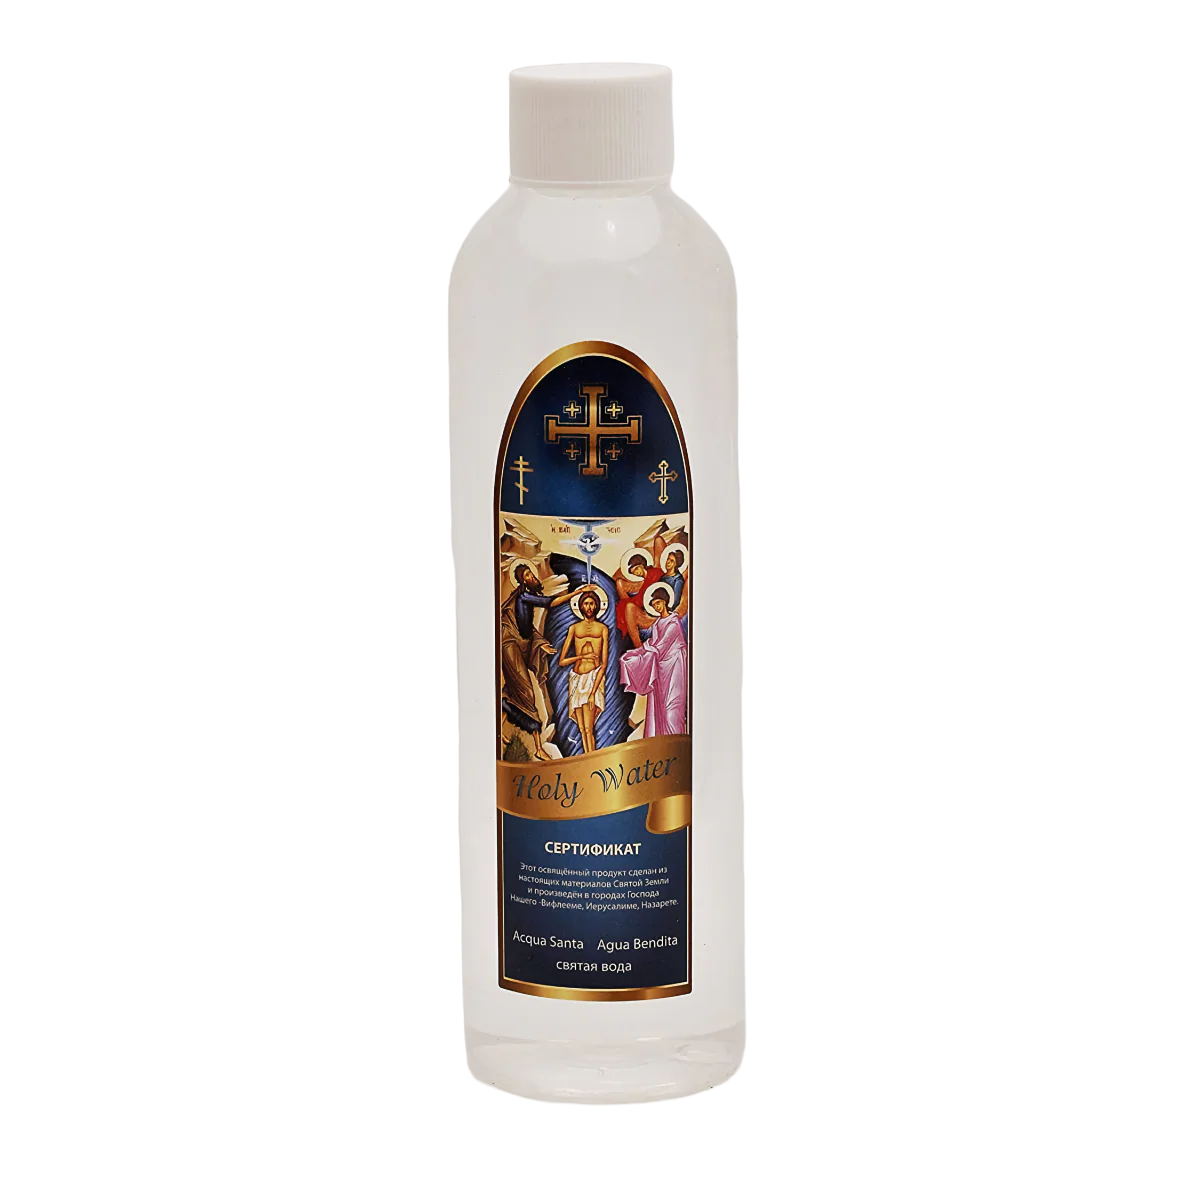 Pure Holy Water Acqua Santa Bottle From The Jordan River size 250 ml. - 8.45 oz.